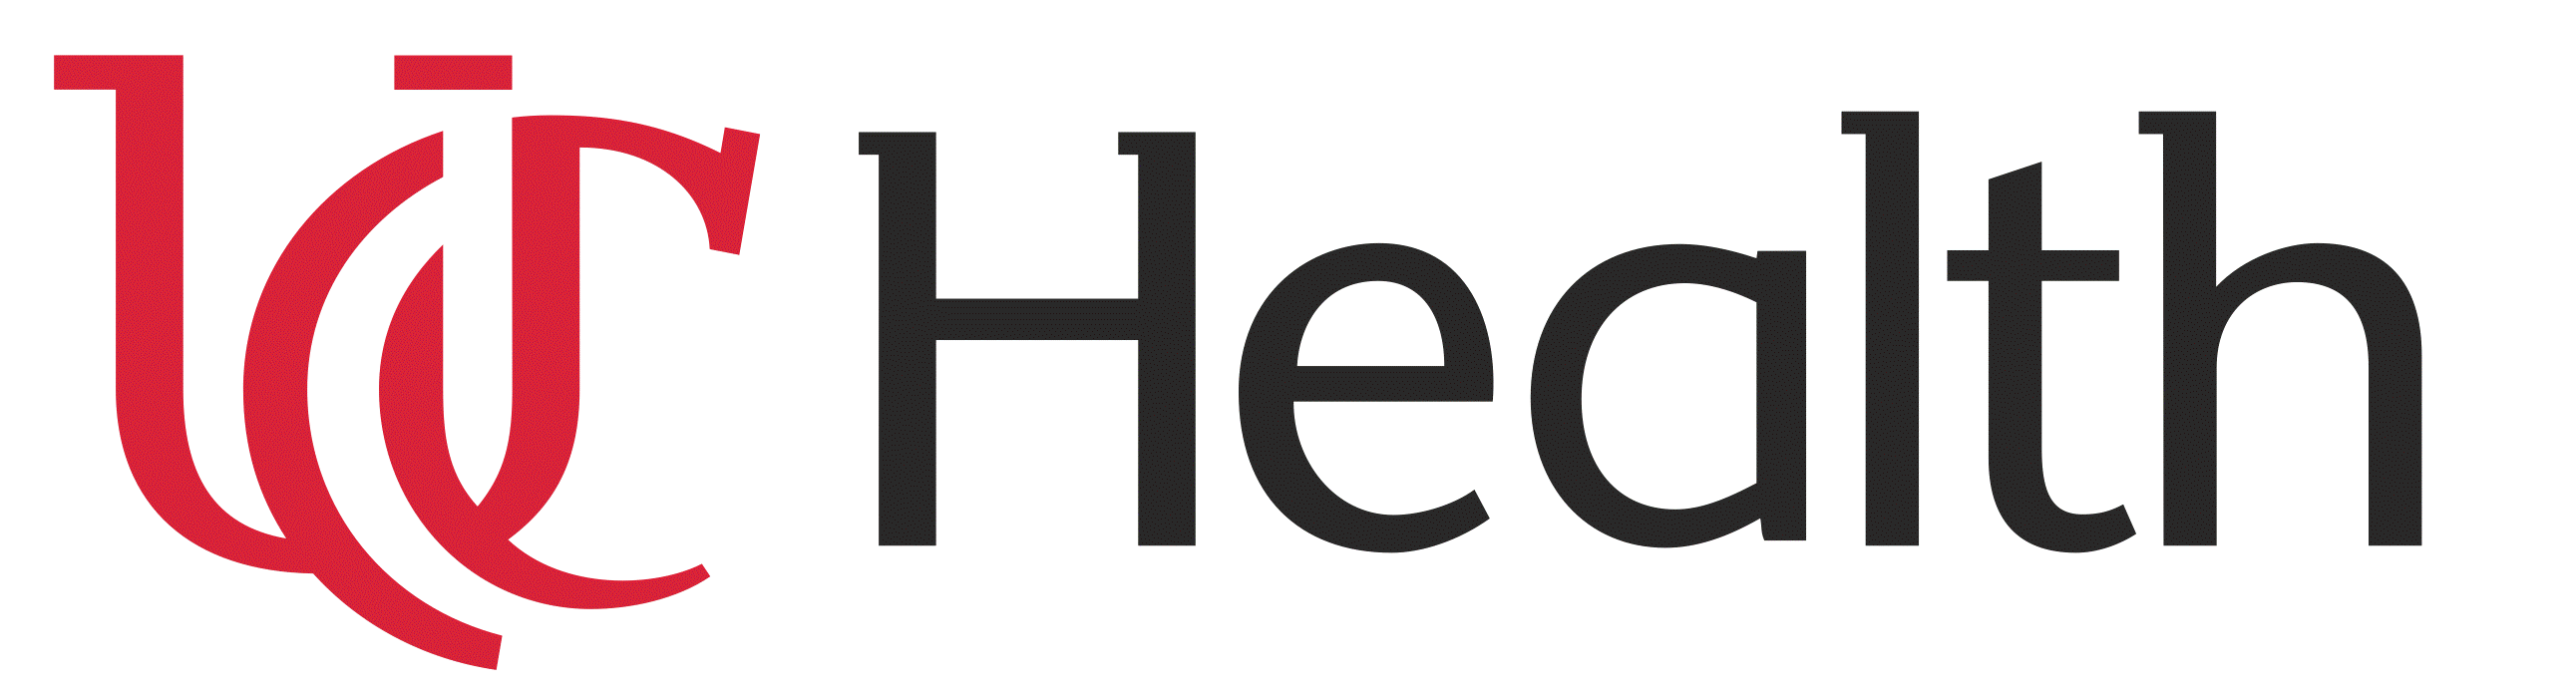 Uc health logo